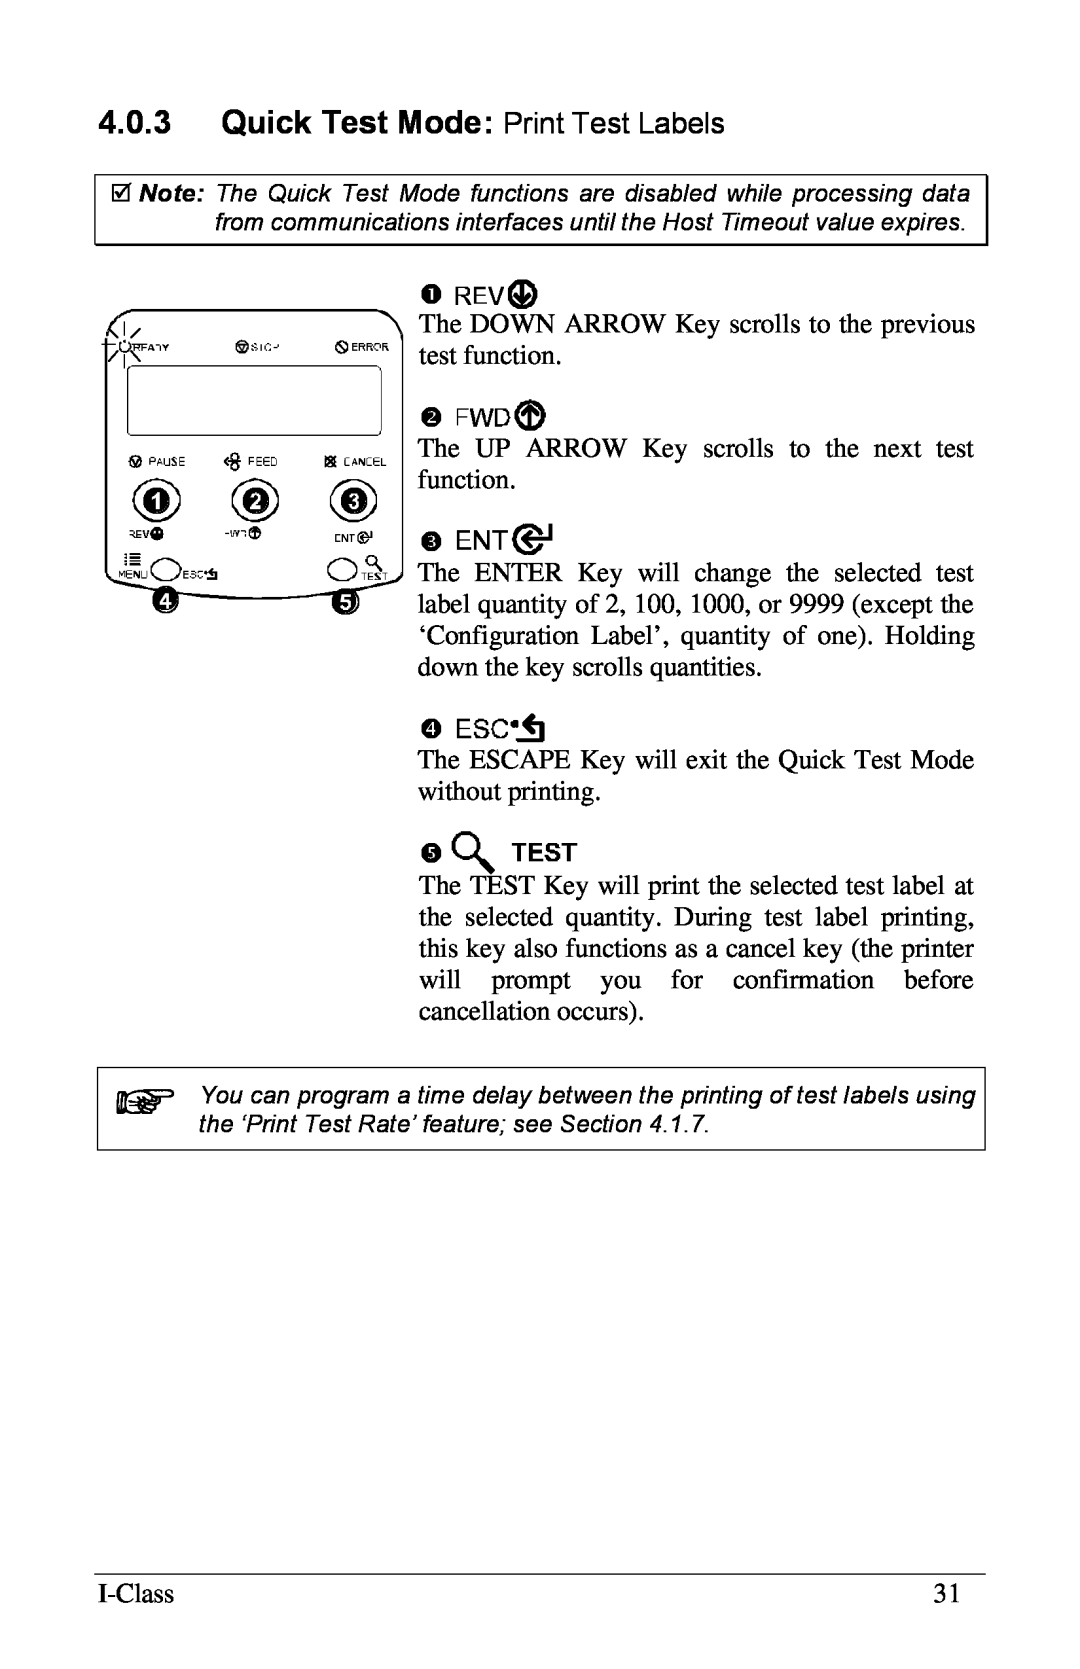 Xerox I Class manual 4.0.3Quick Test Mode: Print Test Labels 